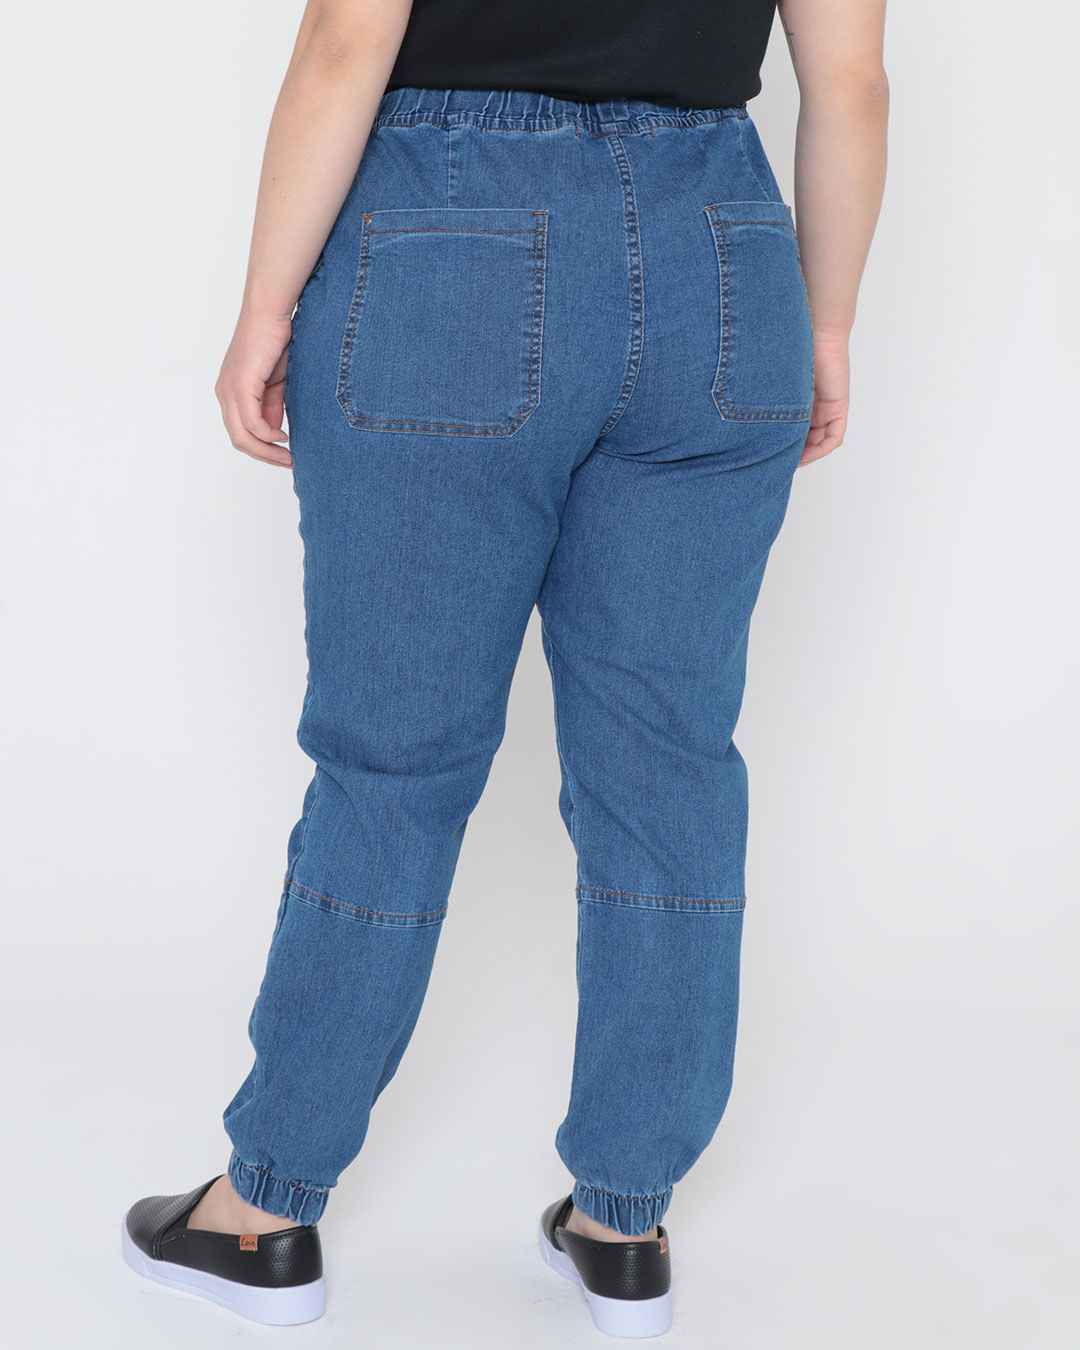 Calca-Jeans-Feminina-Plus-Size-Jogger-Azul